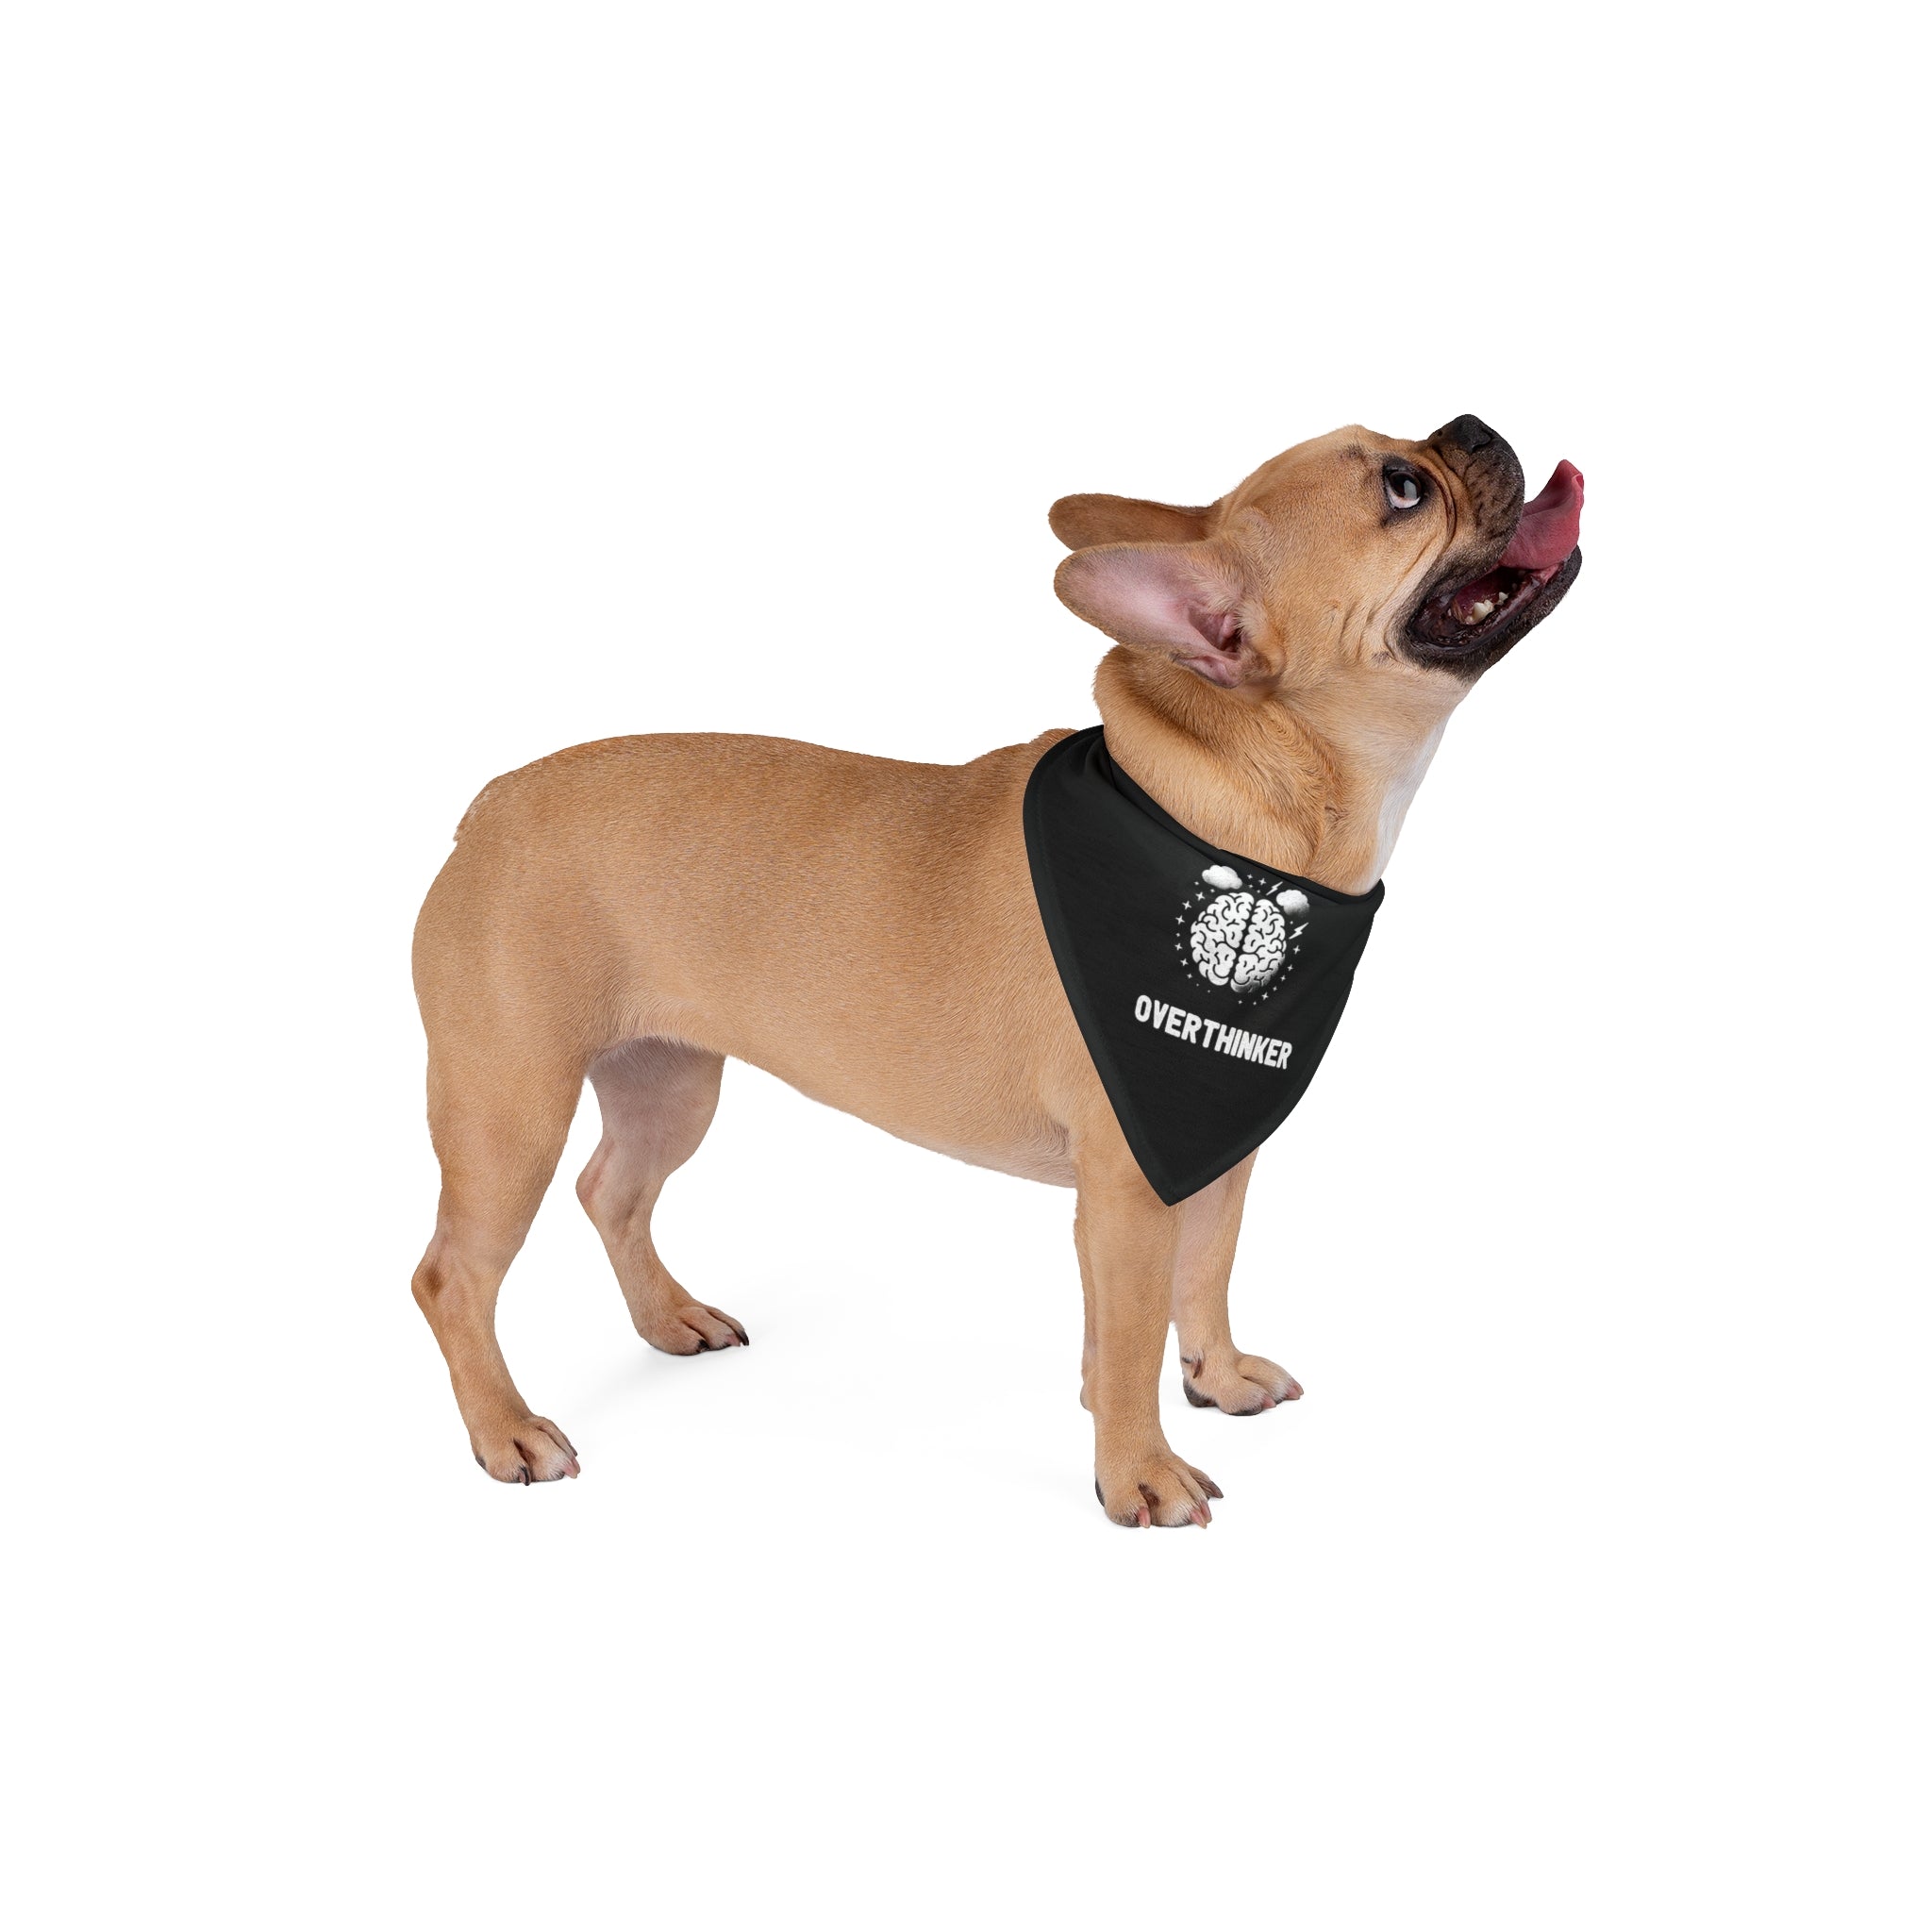 A tan French Bulldog wearing a stylish black polyester pet bandana with the name "Professional Overthinker - Pet Bandana" looks upwards with its tongue out.